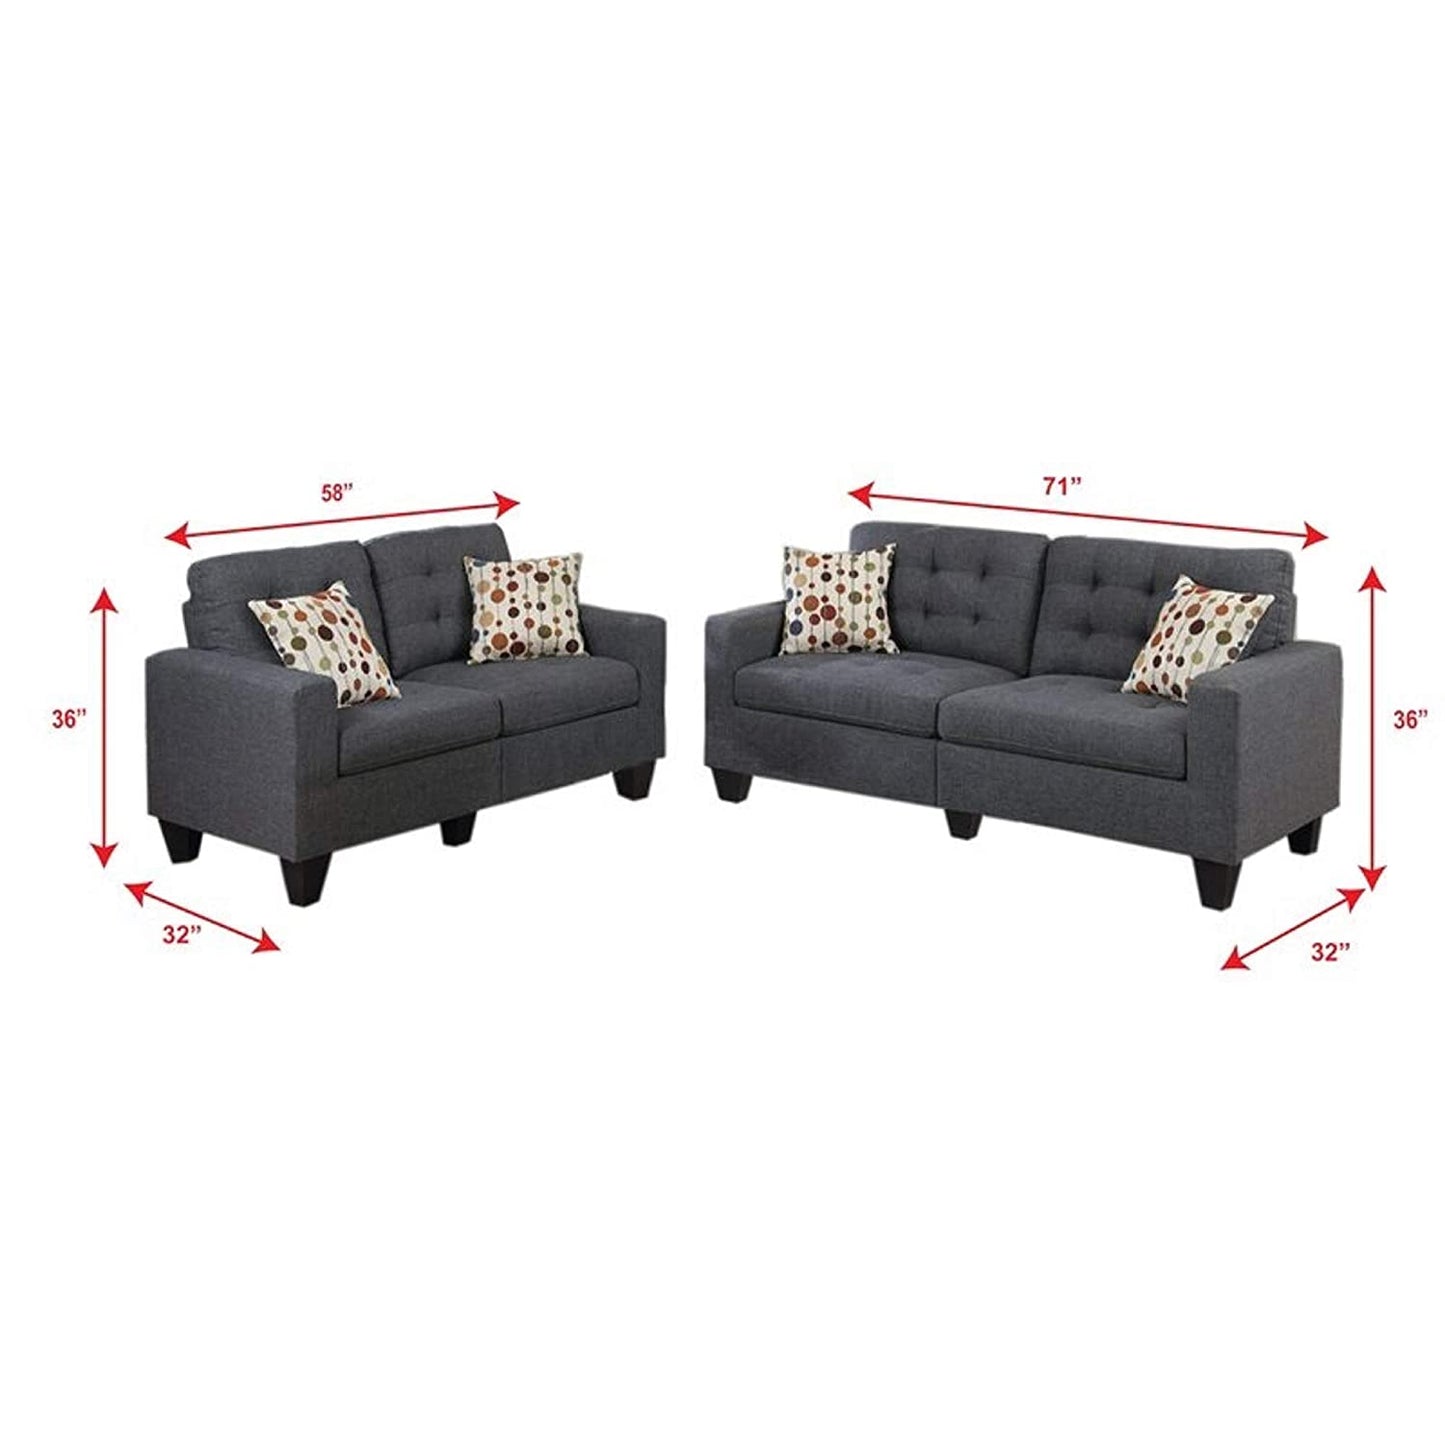 Designer Sofa Set:- Barkeley 3+2+2 Fabric 7 Seater Luxury Furniture Sofa Set (Grey)